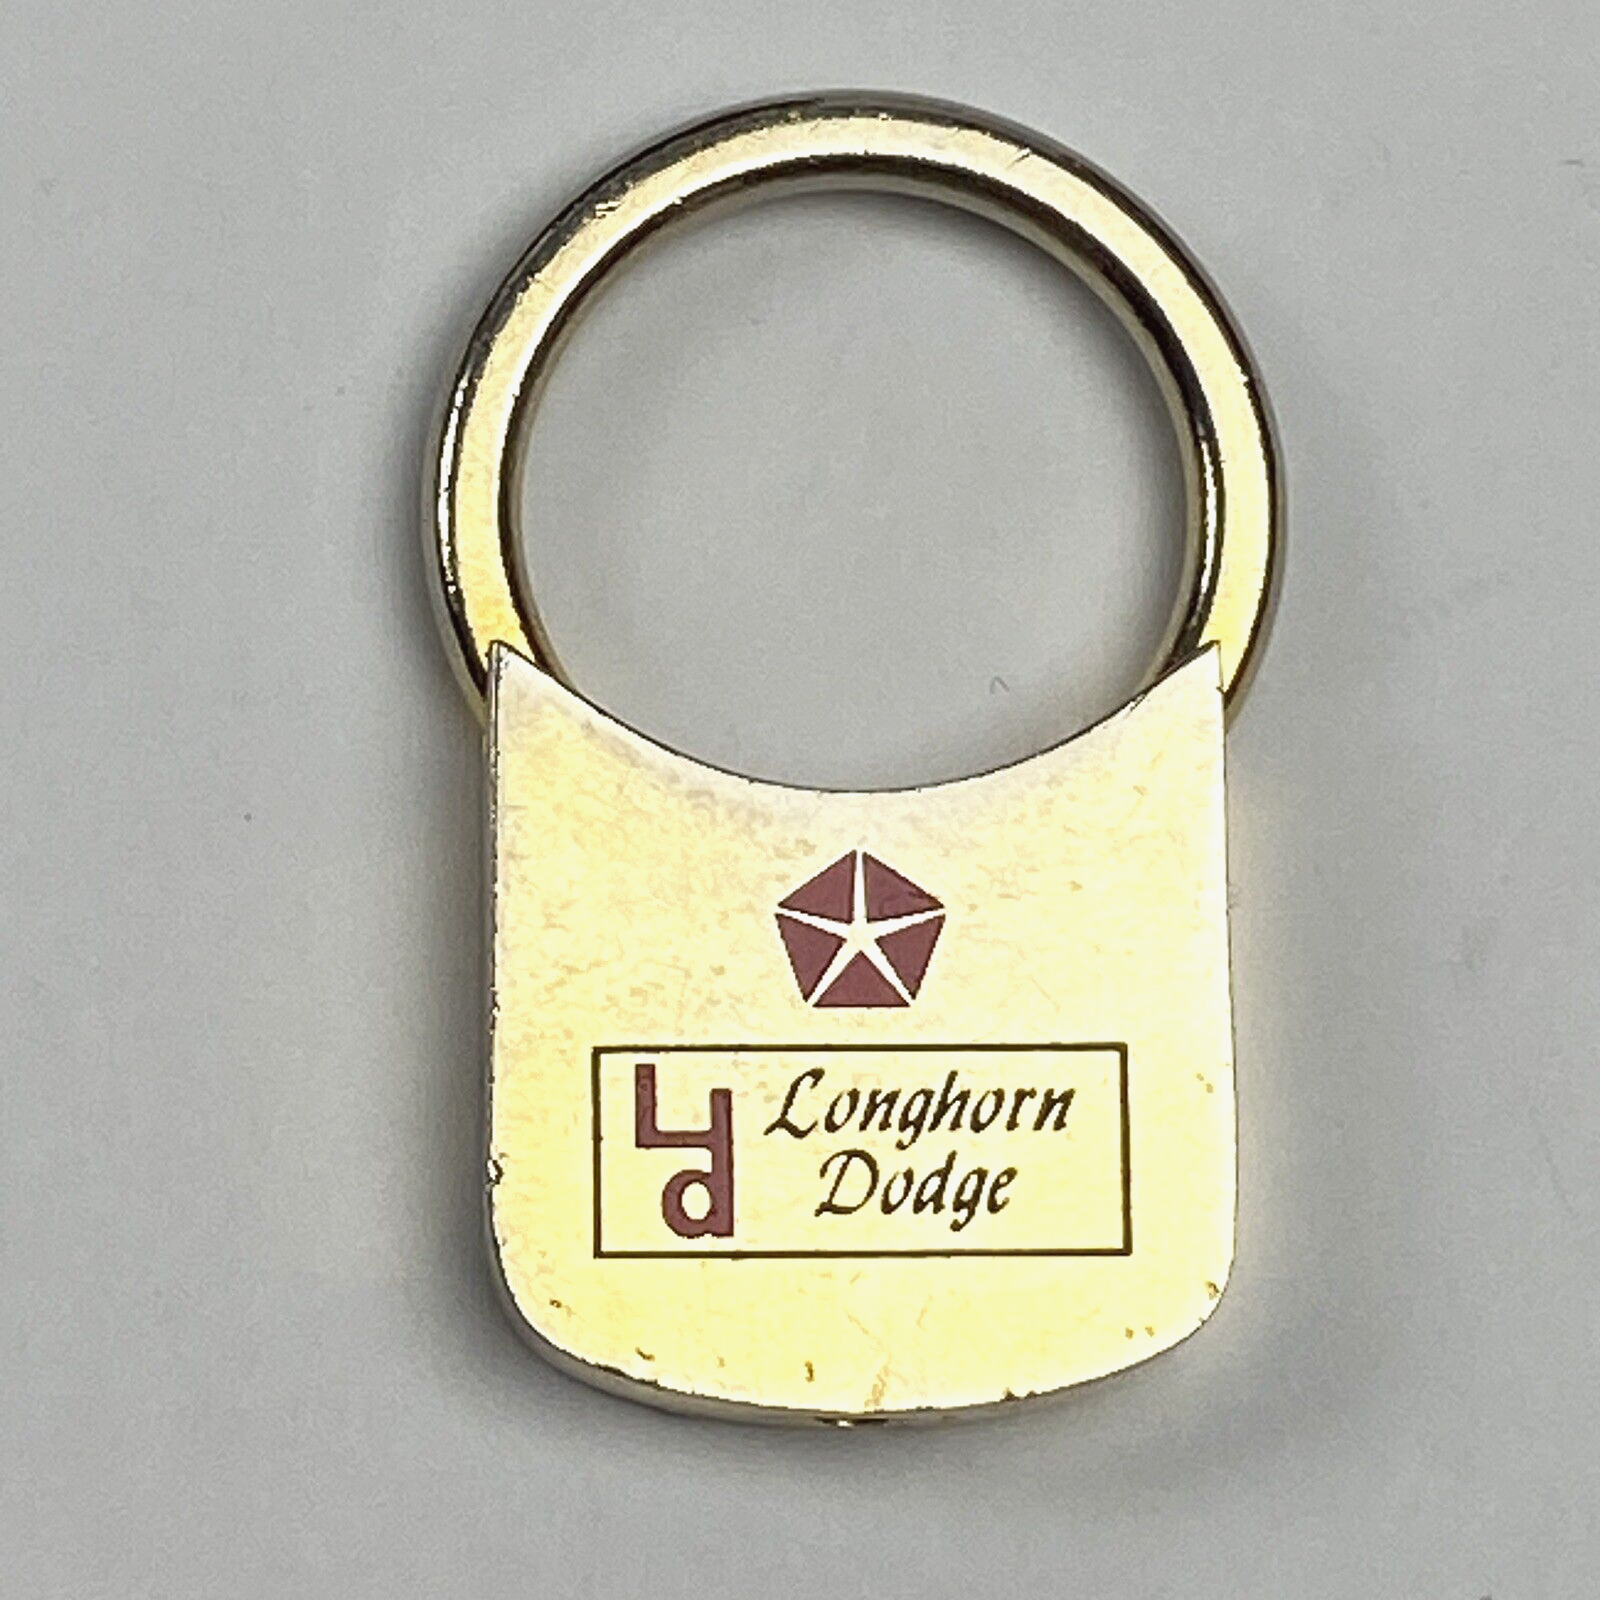 Longhorn Dodge Ram Key Ring Car Dealership Promotion Fob